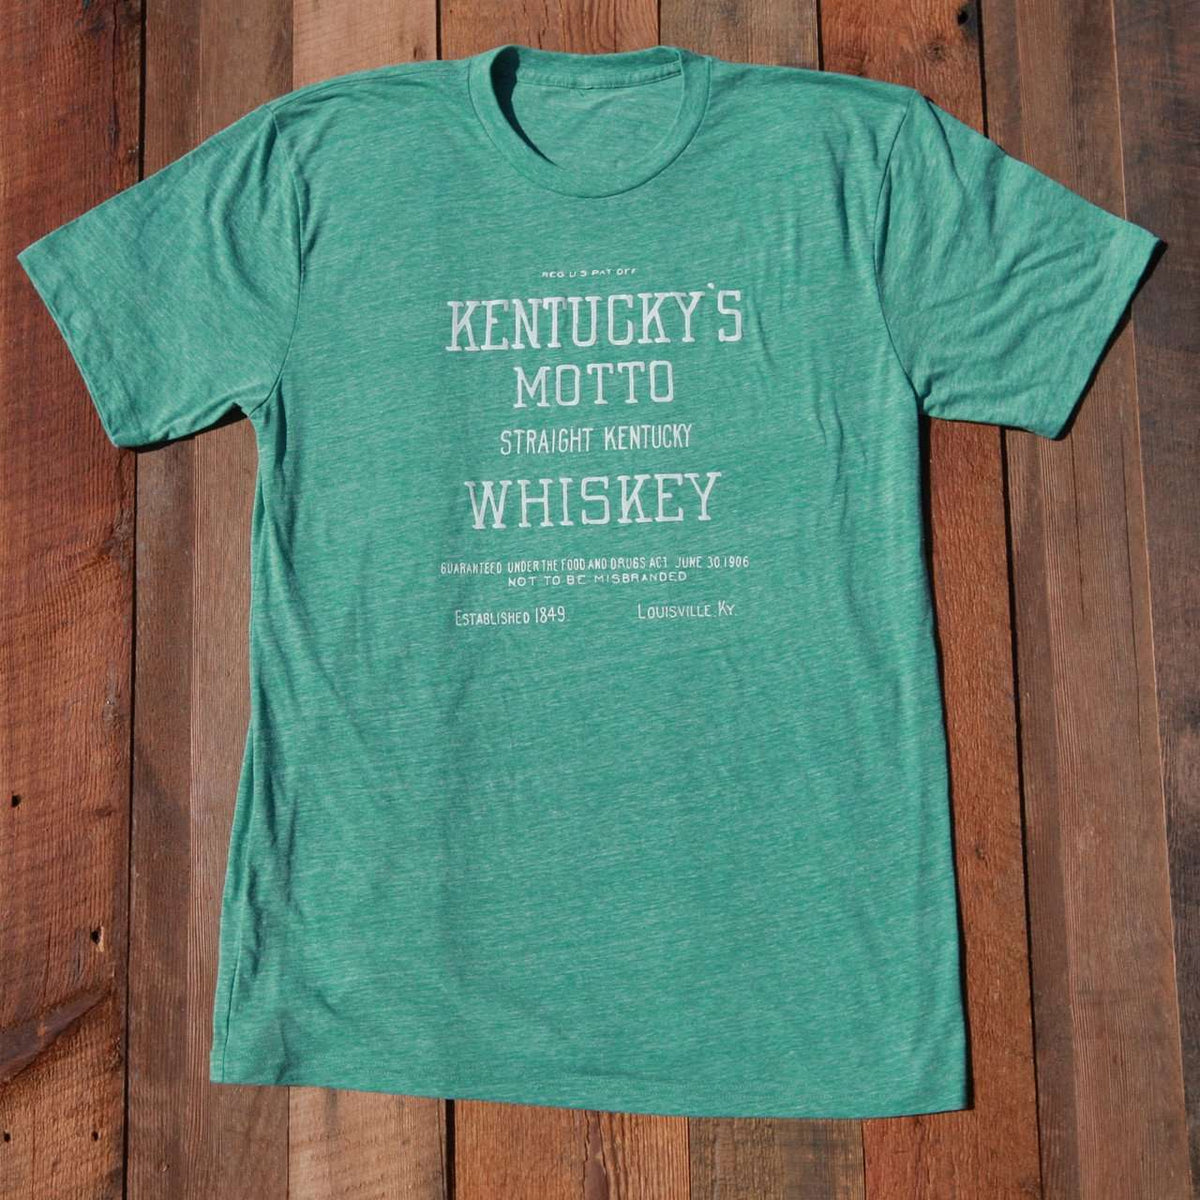 Kentucky's Motto Tee in Green by Pappy Van Winkle - Country Club Prep